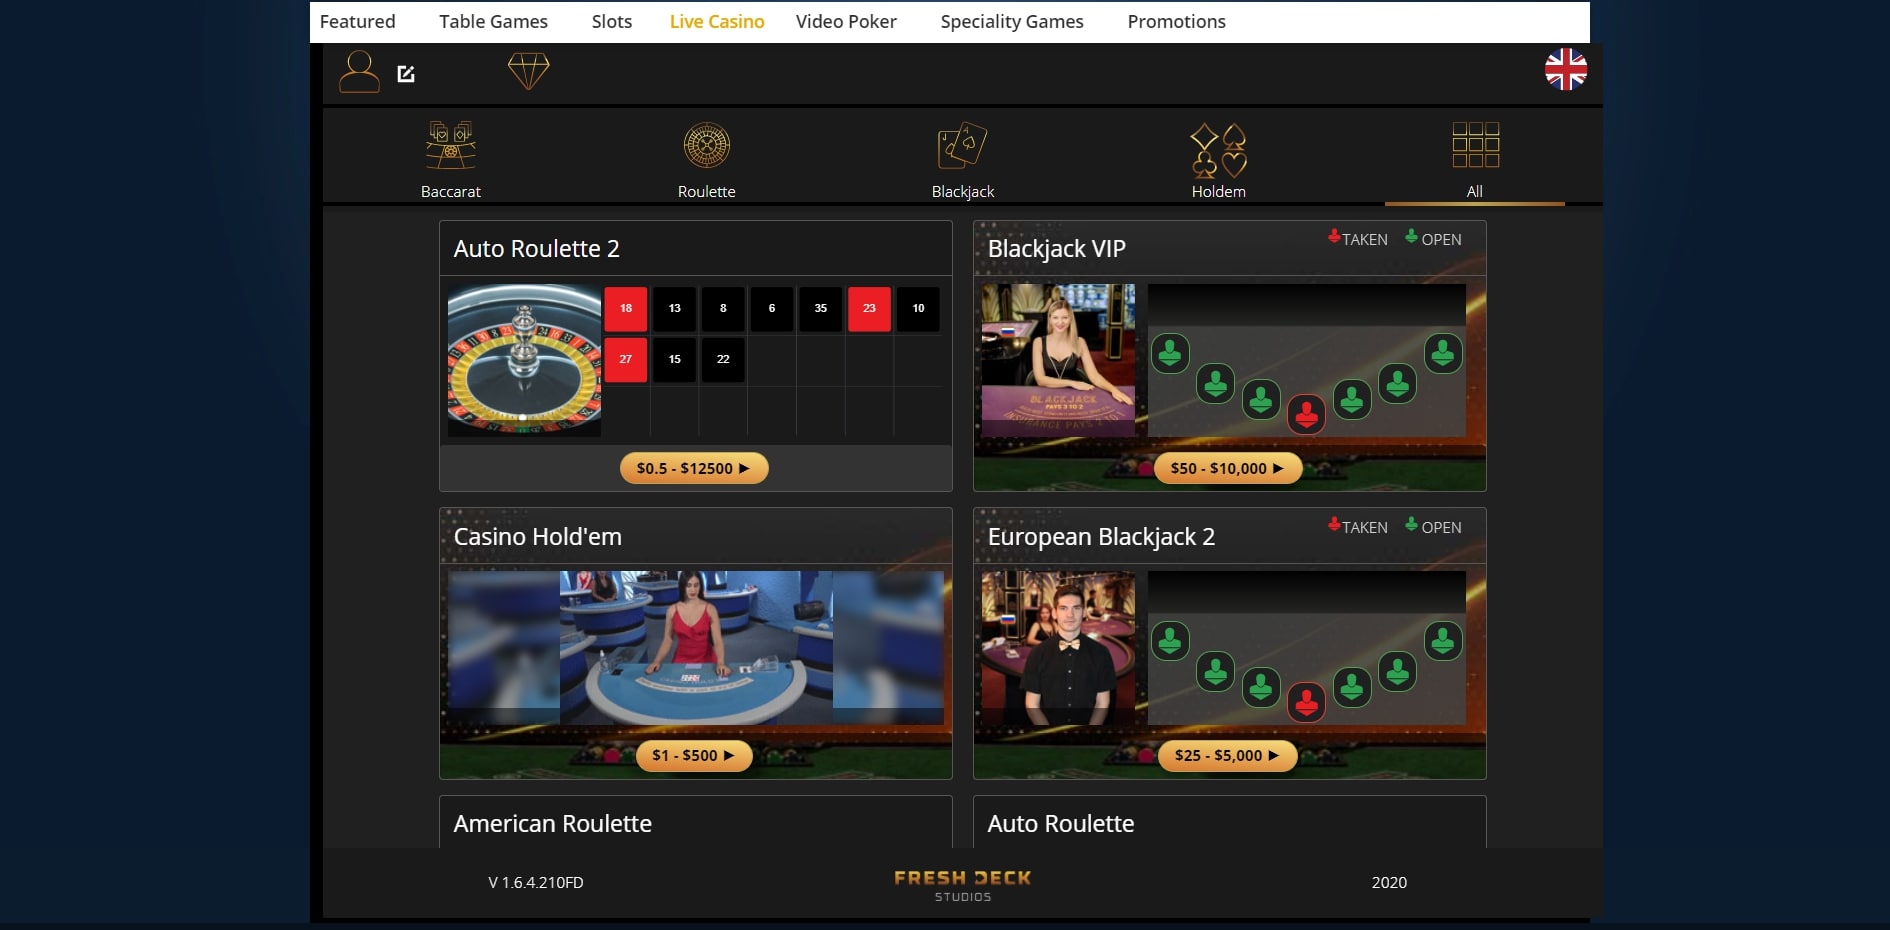 Sports Betting Casino Live Dealer Games